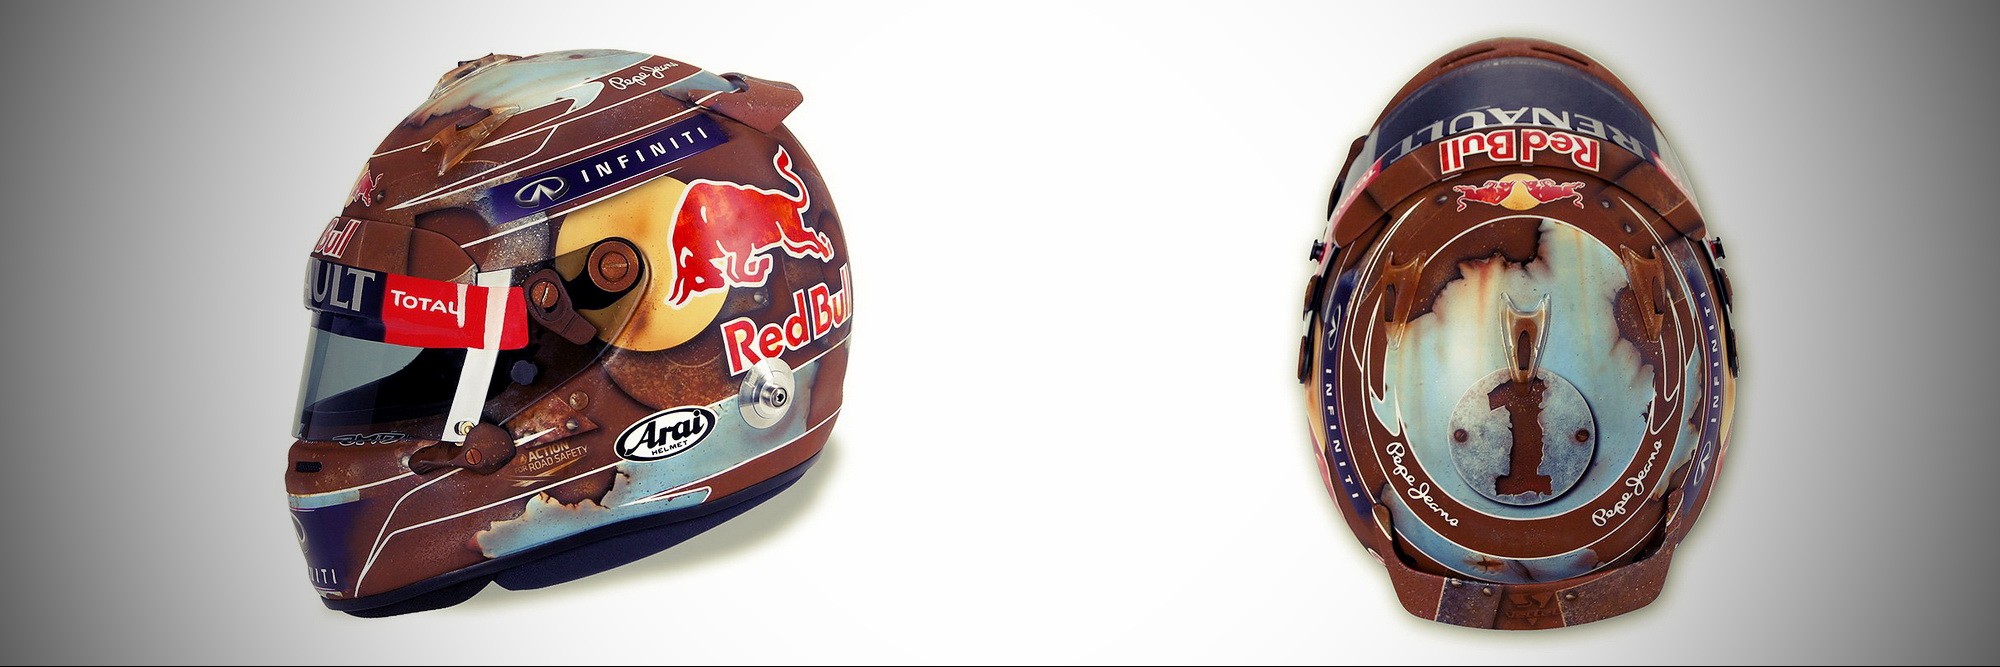 Шлем Себастьяна Феттеля на Гран-При Малайзии 2014 | 2014 Malaysian Grand Prix helmet of Sebastian Vettel